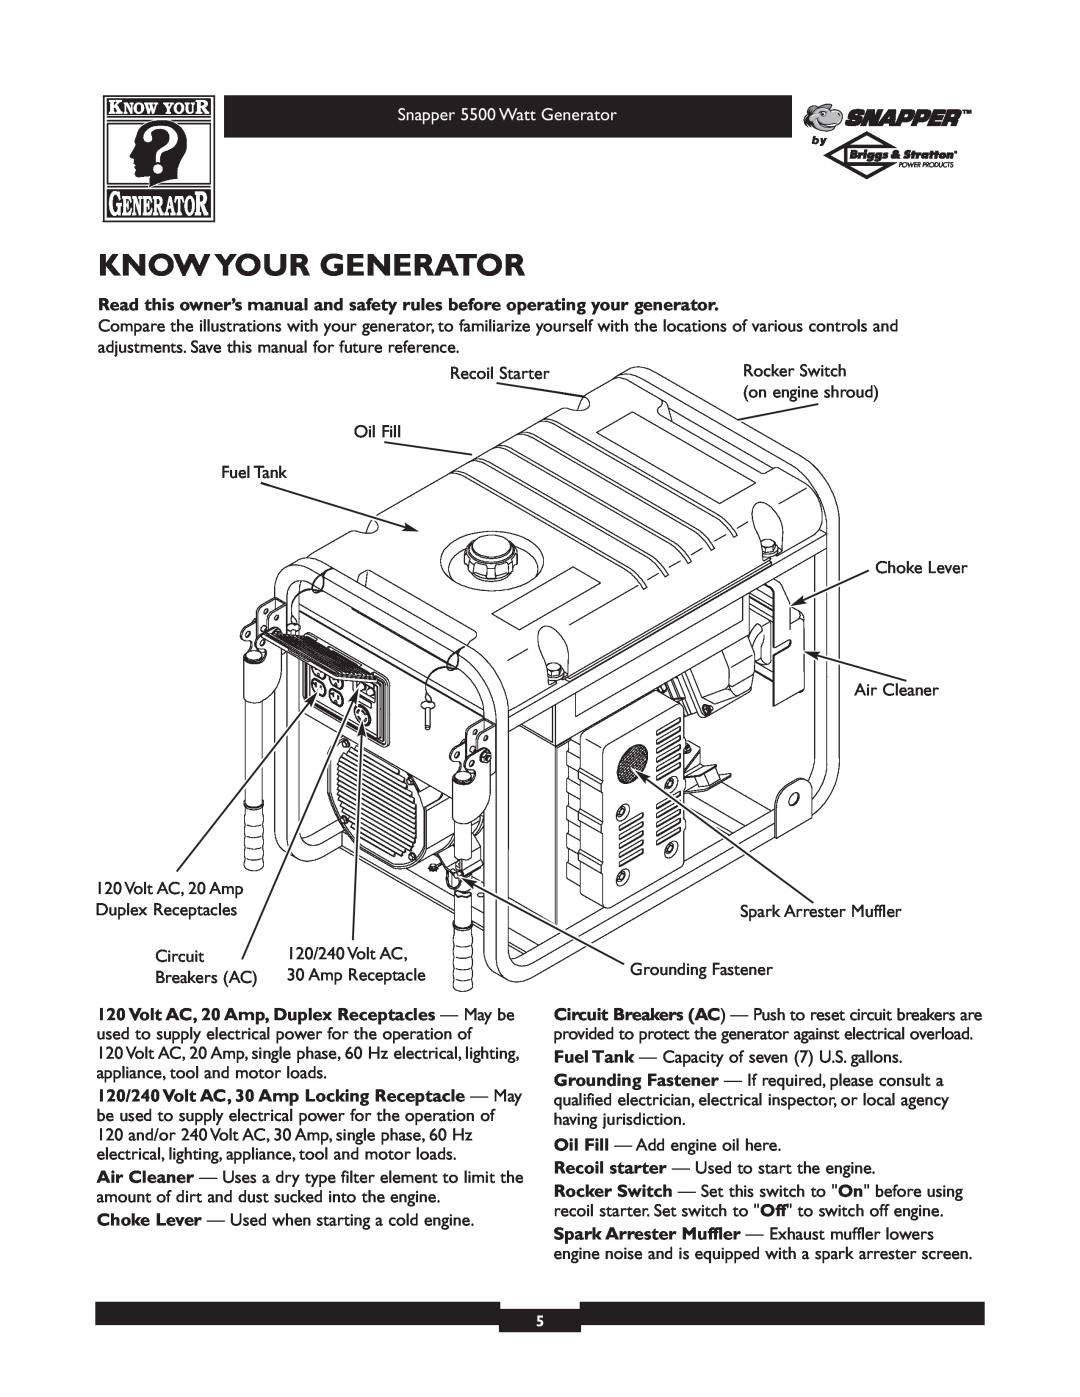 Snapper 1668-0 owner manual Know Your Generator, Snapper 5500 Watt Generator 